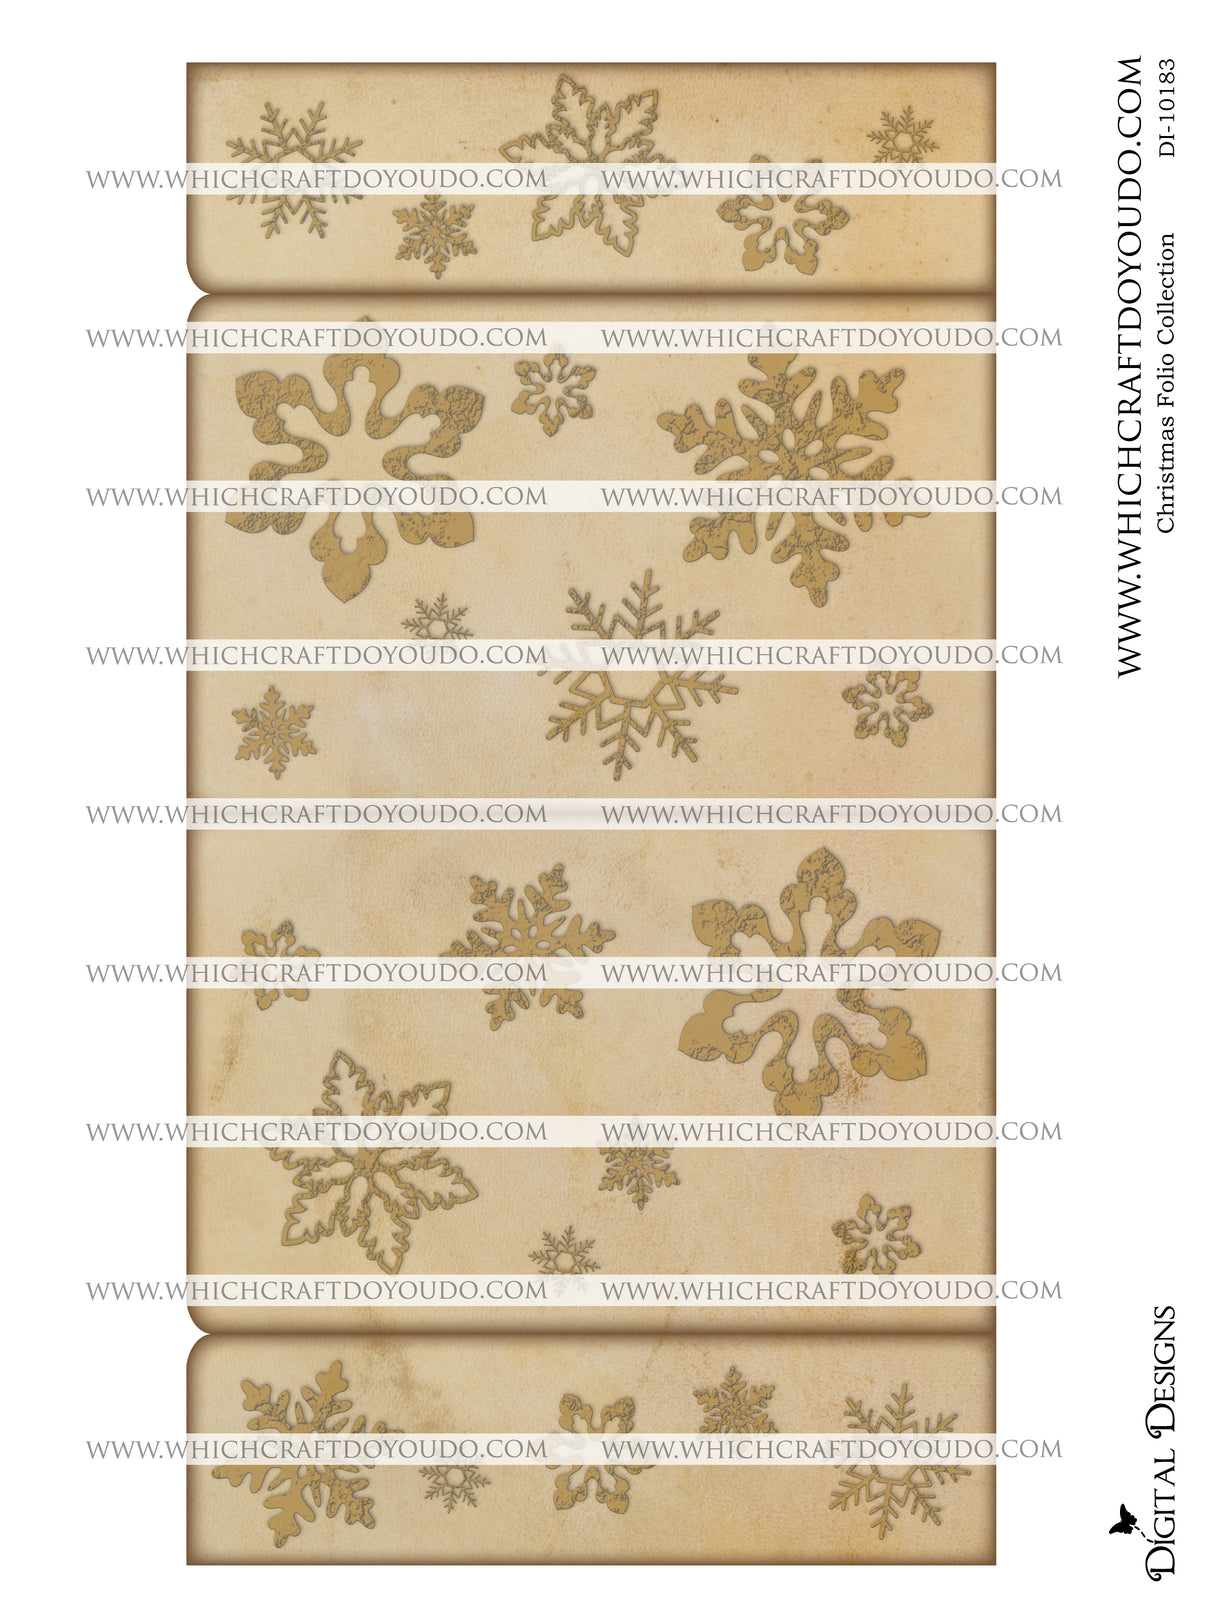 Christmas Folio Collection - DI-10183 - Digital Download